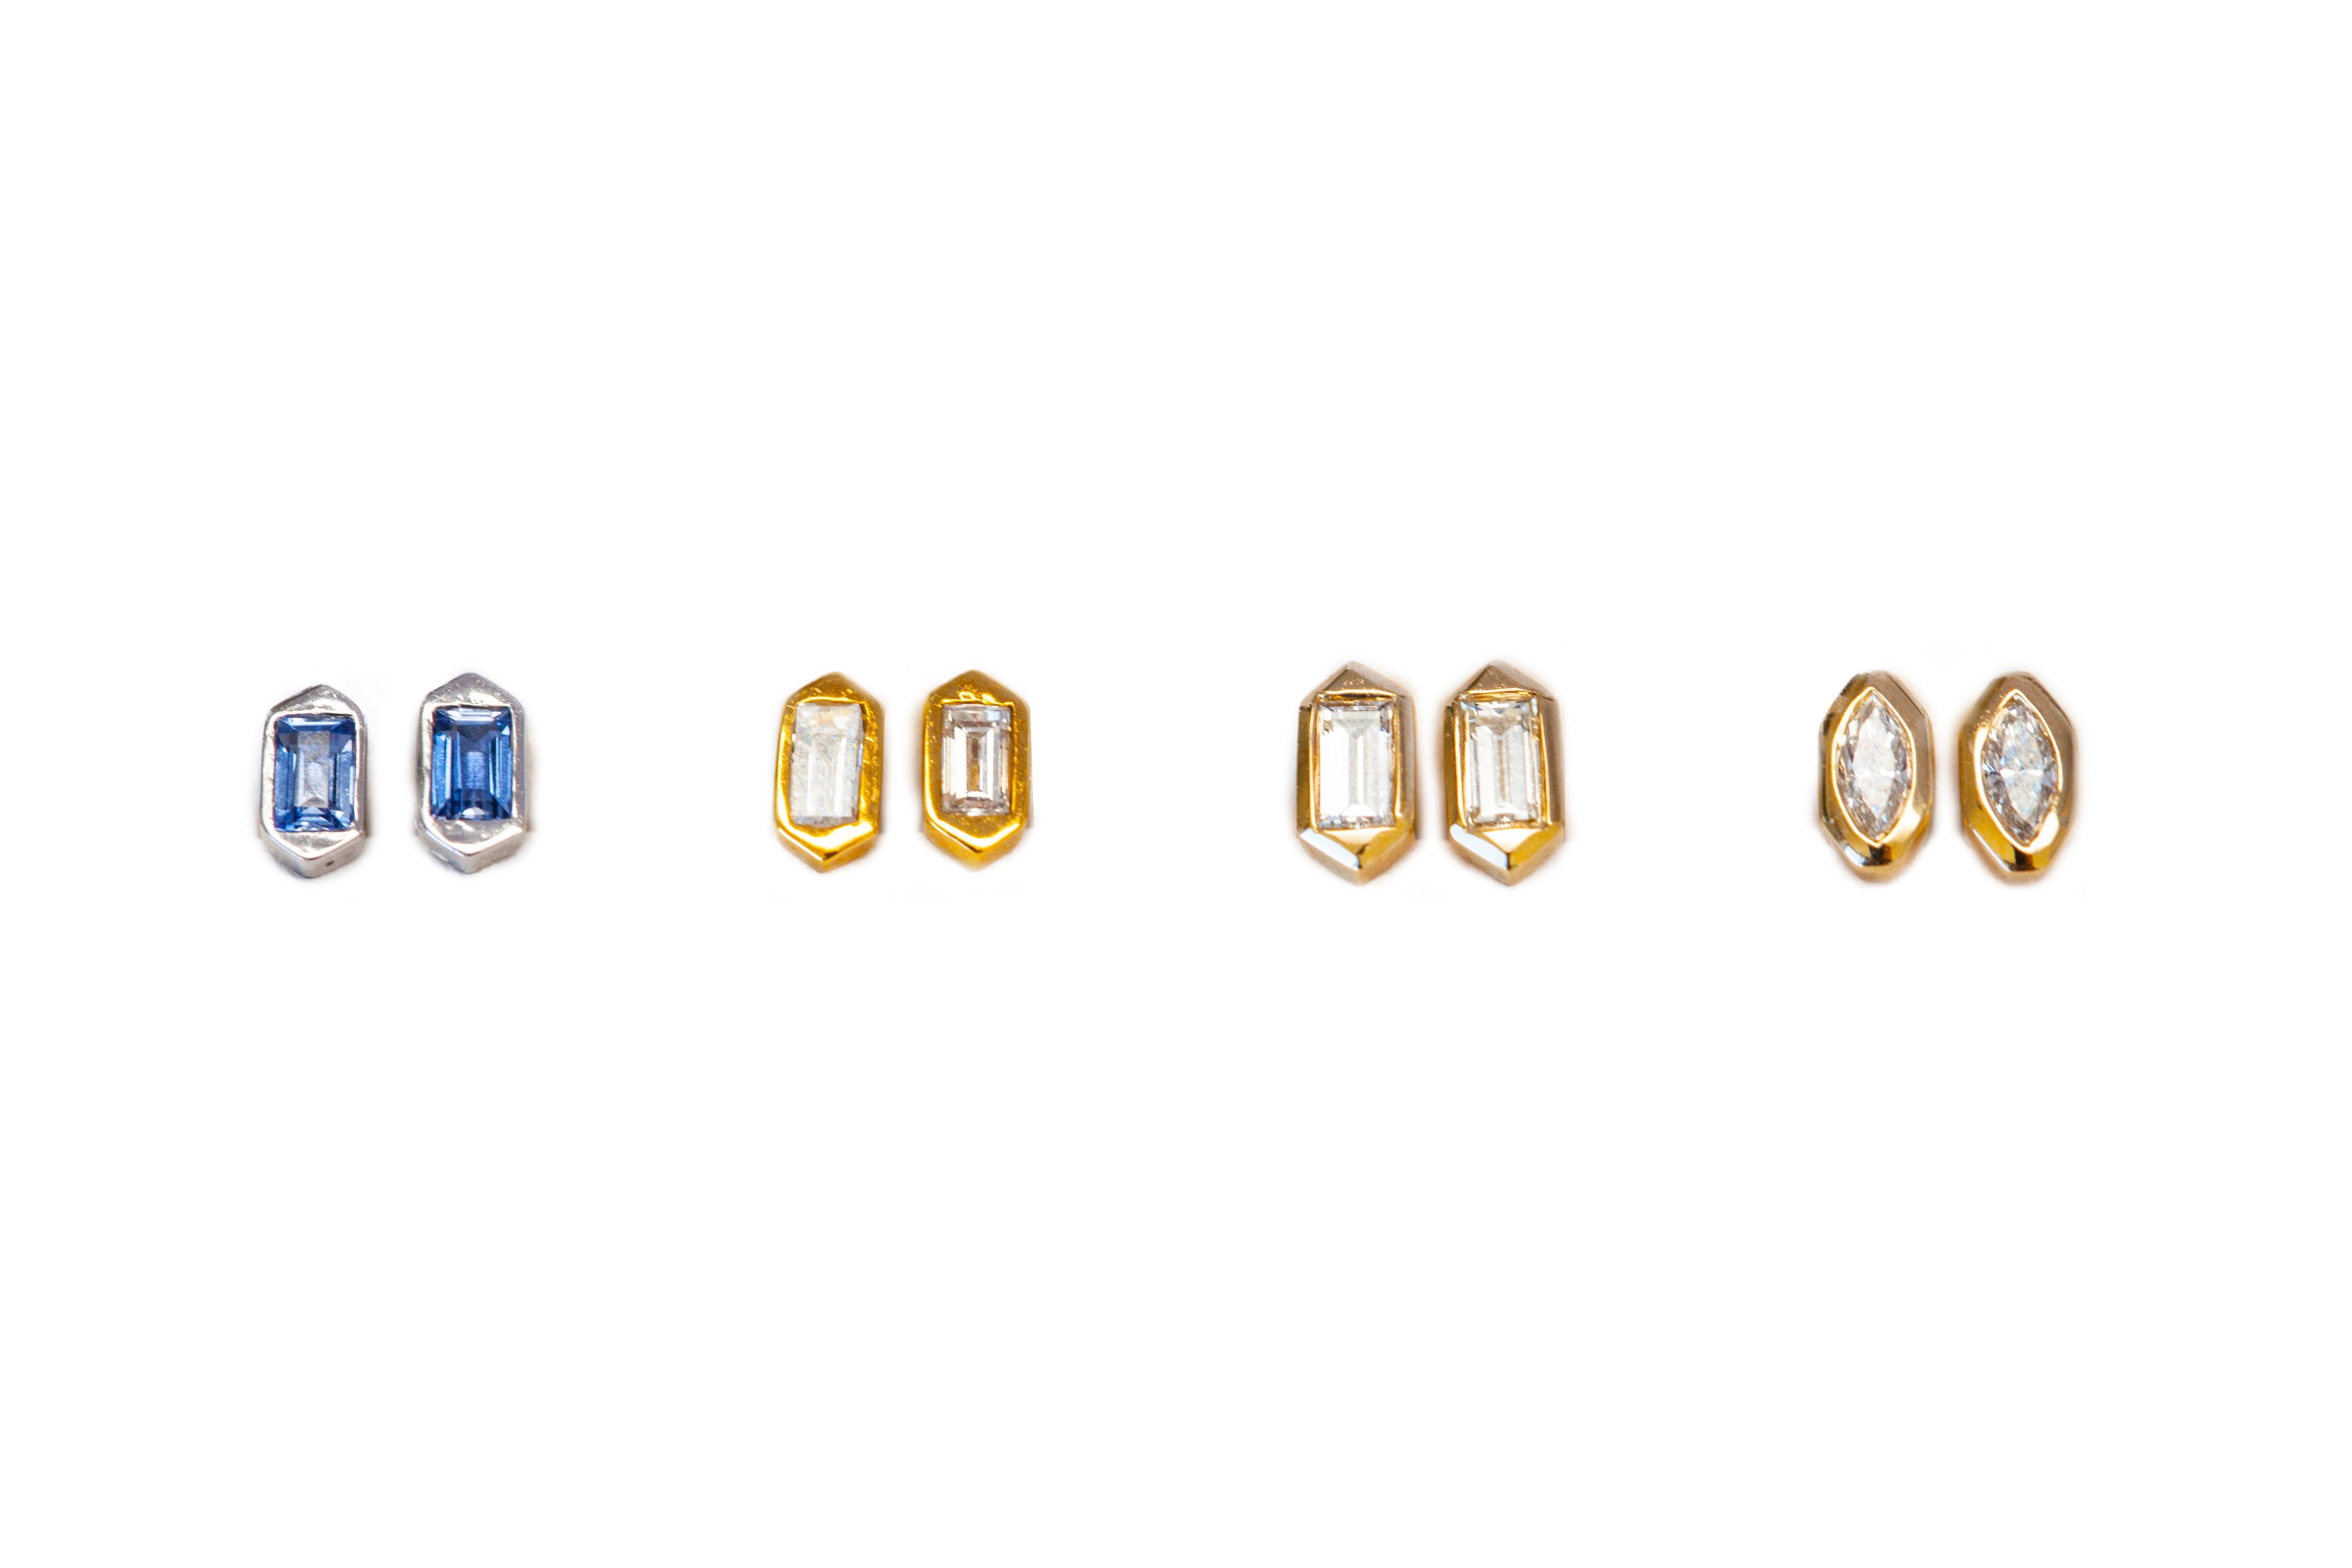 Hexagon shaped stud earrings with baguette diamonds in 18k yellow gold.
